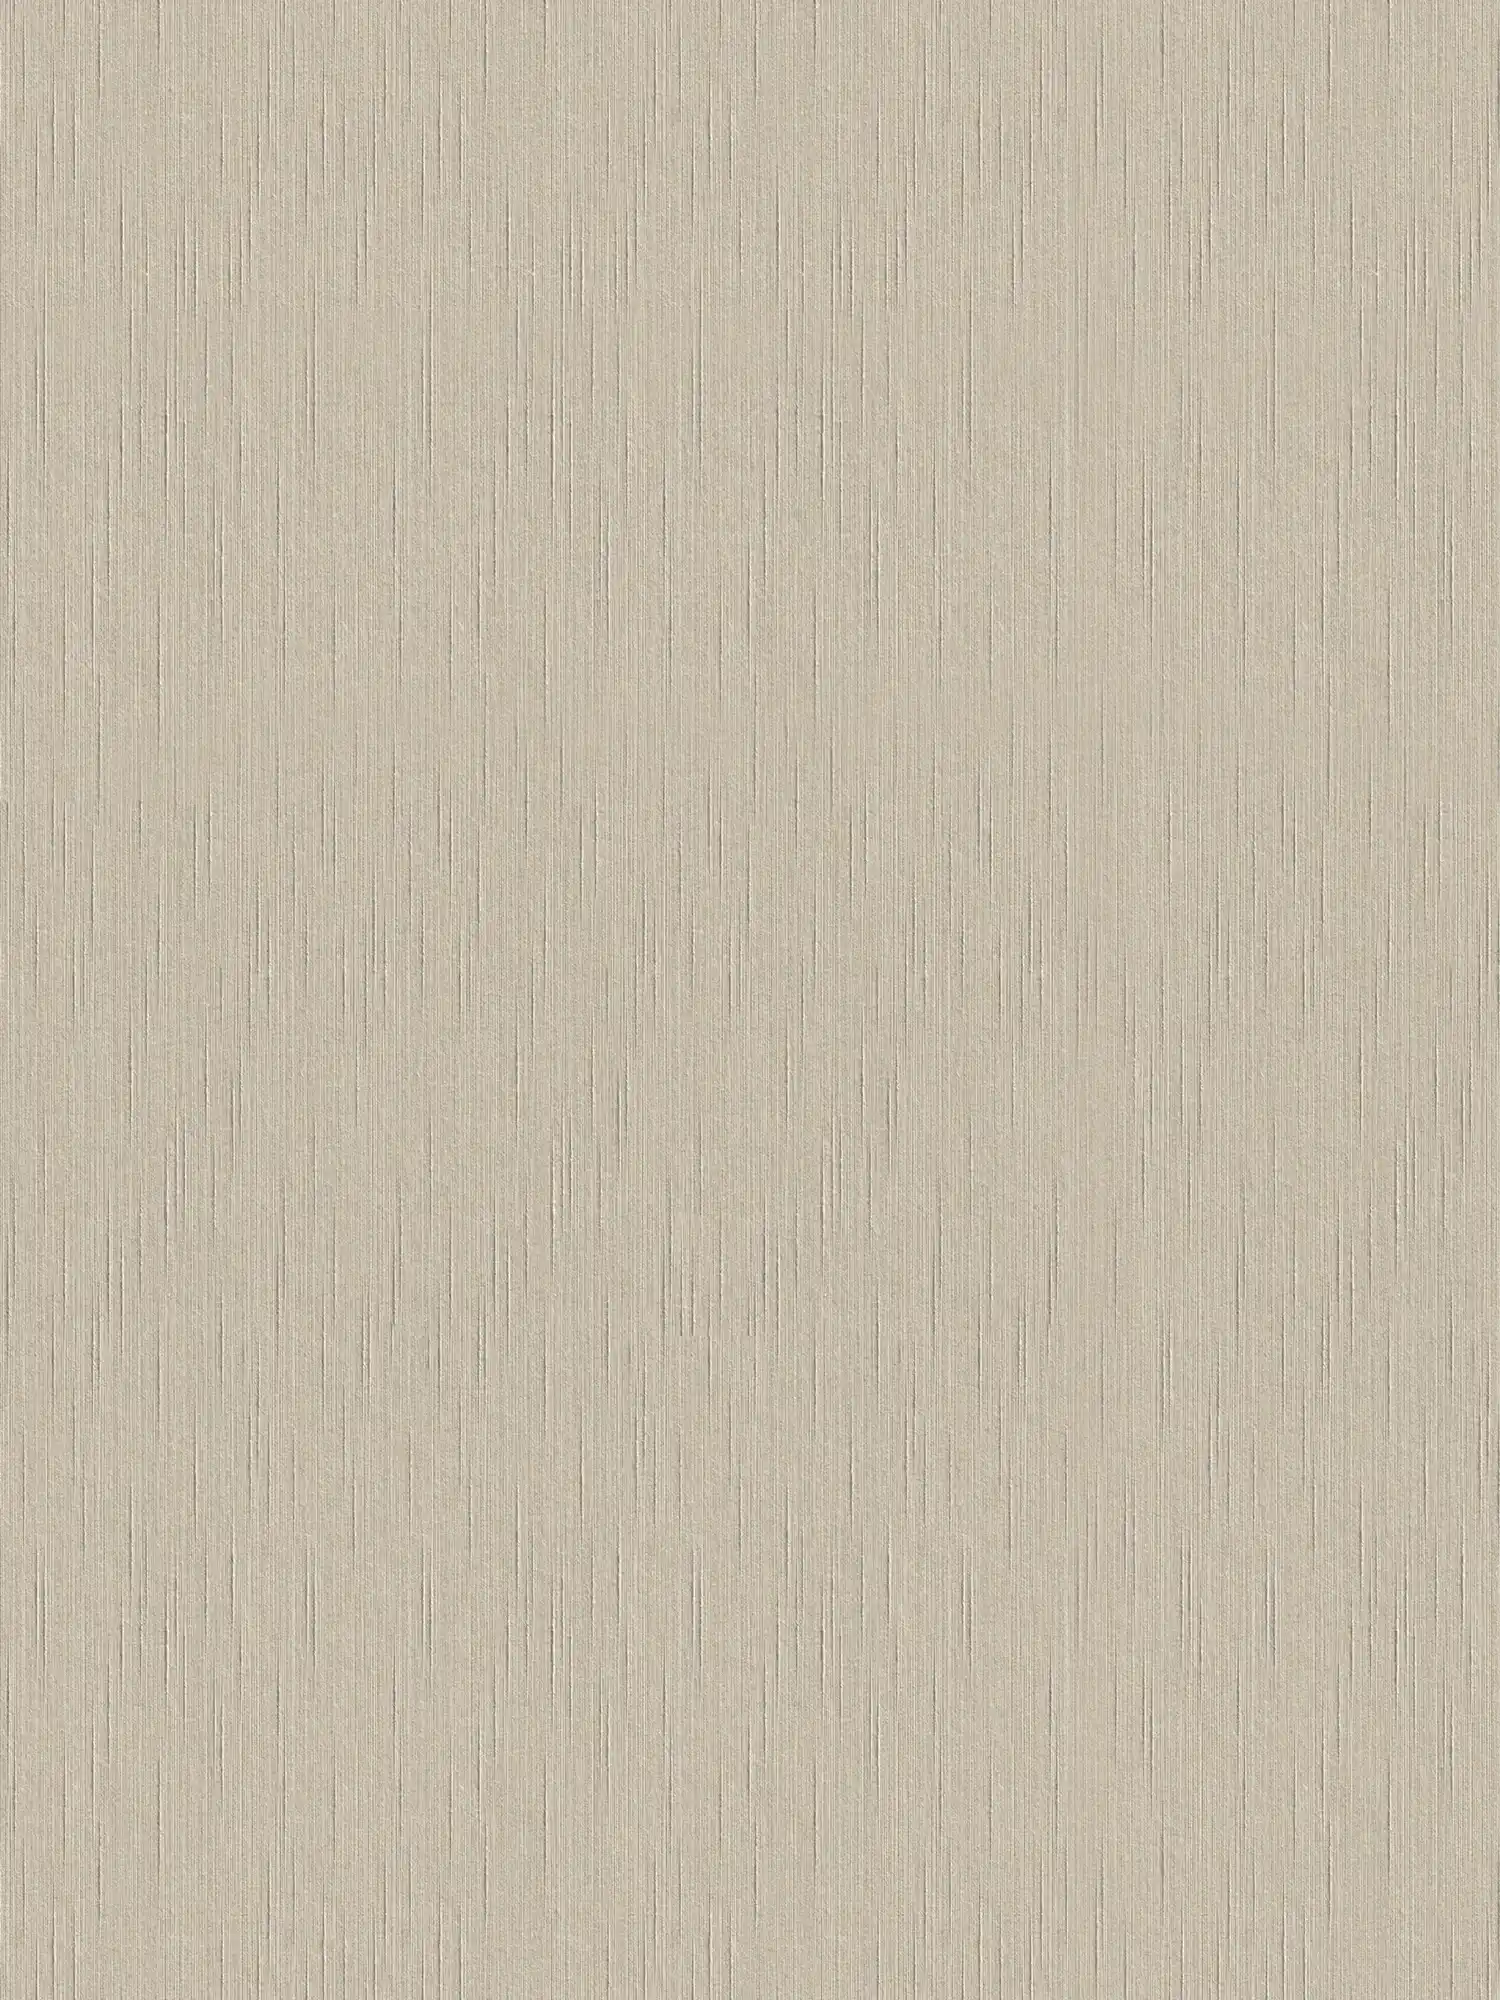 Papel pintado no tejido beige camello con estructura textil
